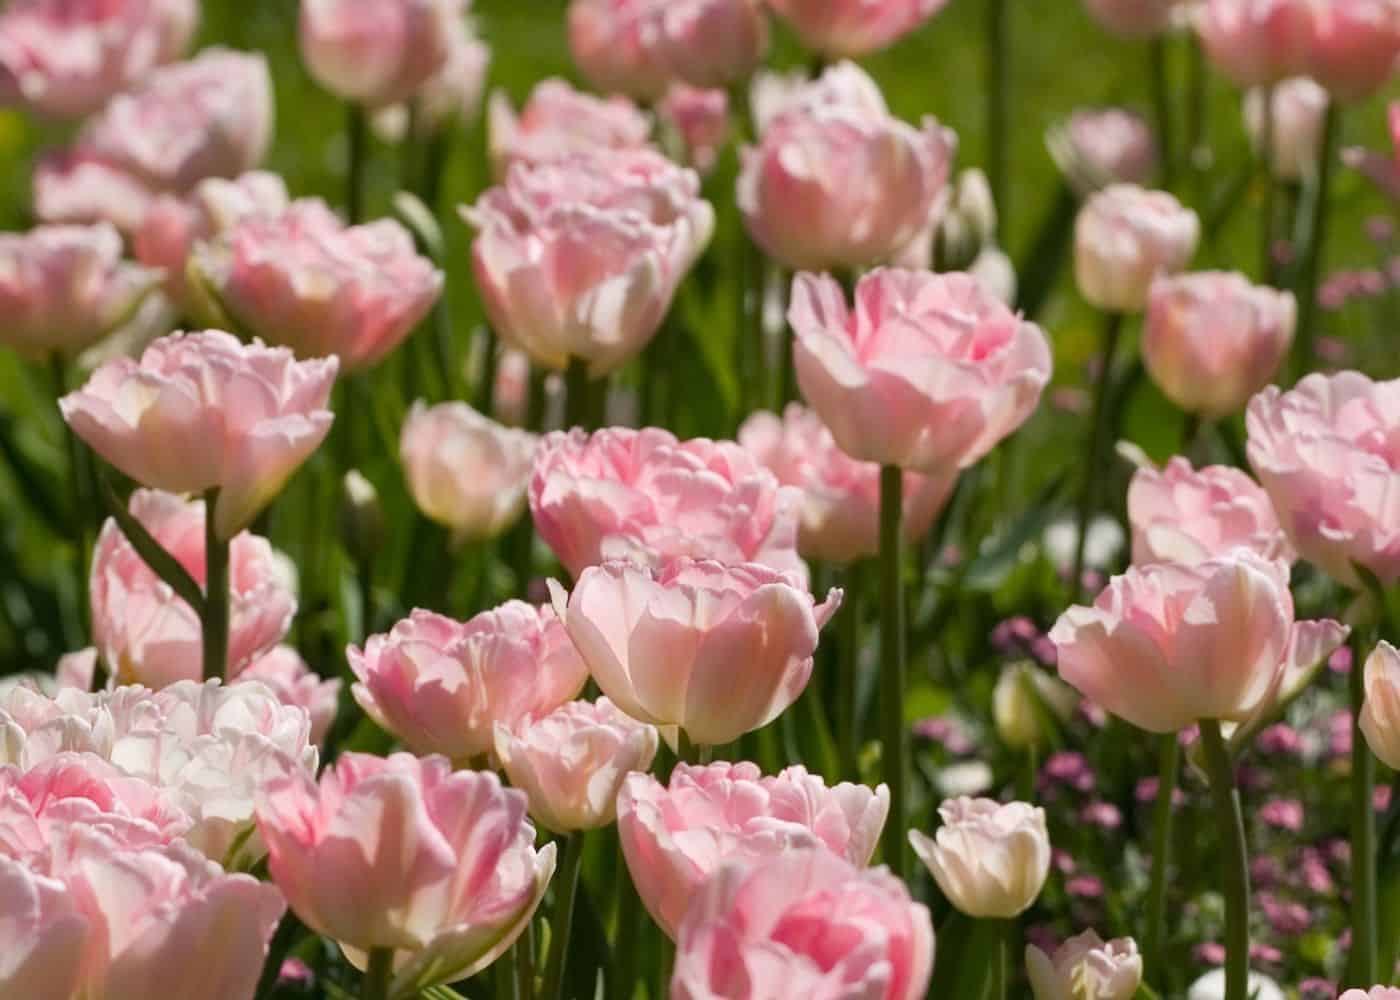 Pink tulips - angelique variety